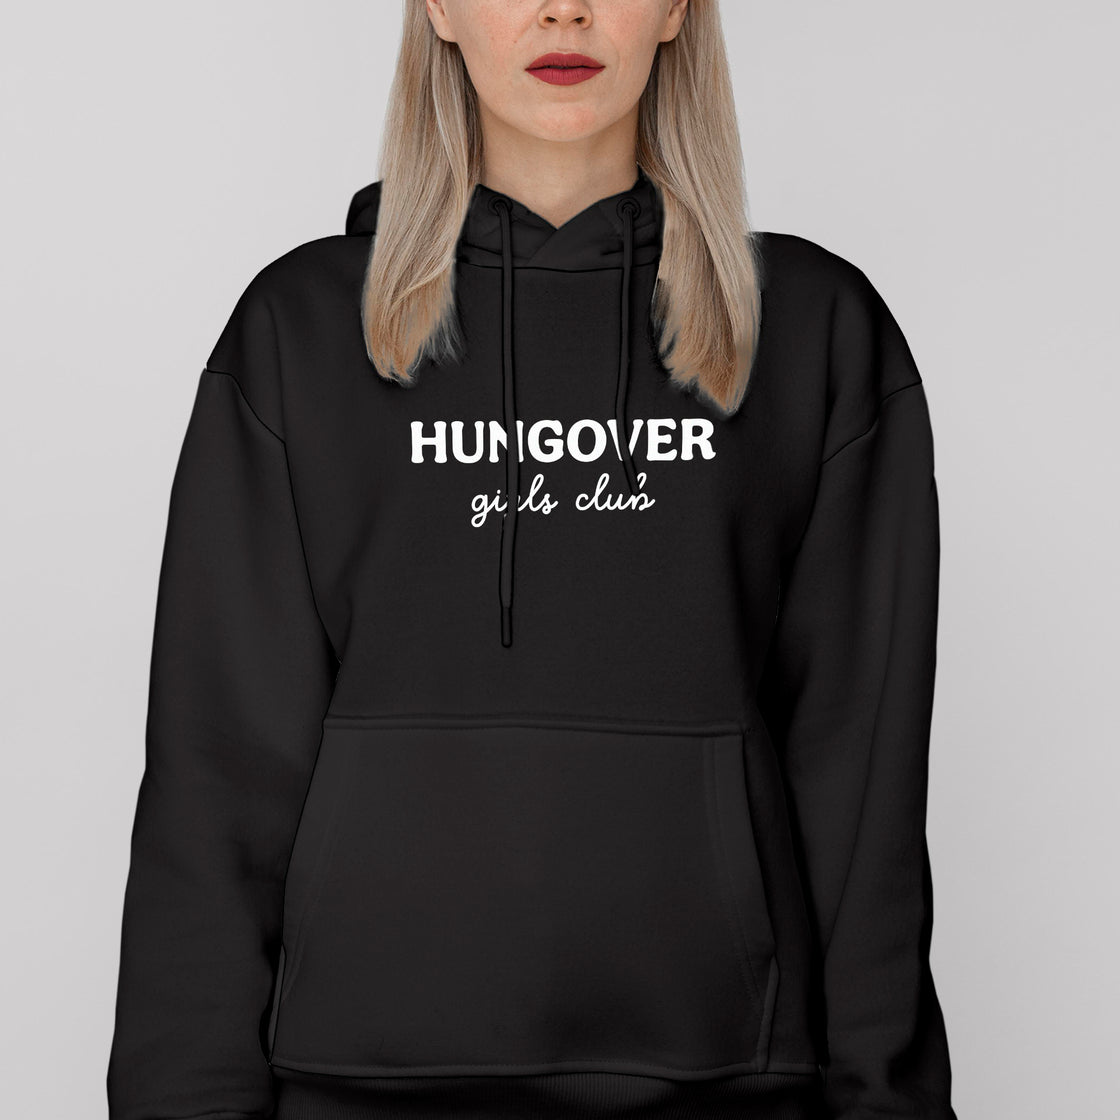 'Hungover Girls Club' Hoodie - Custom Gifts 